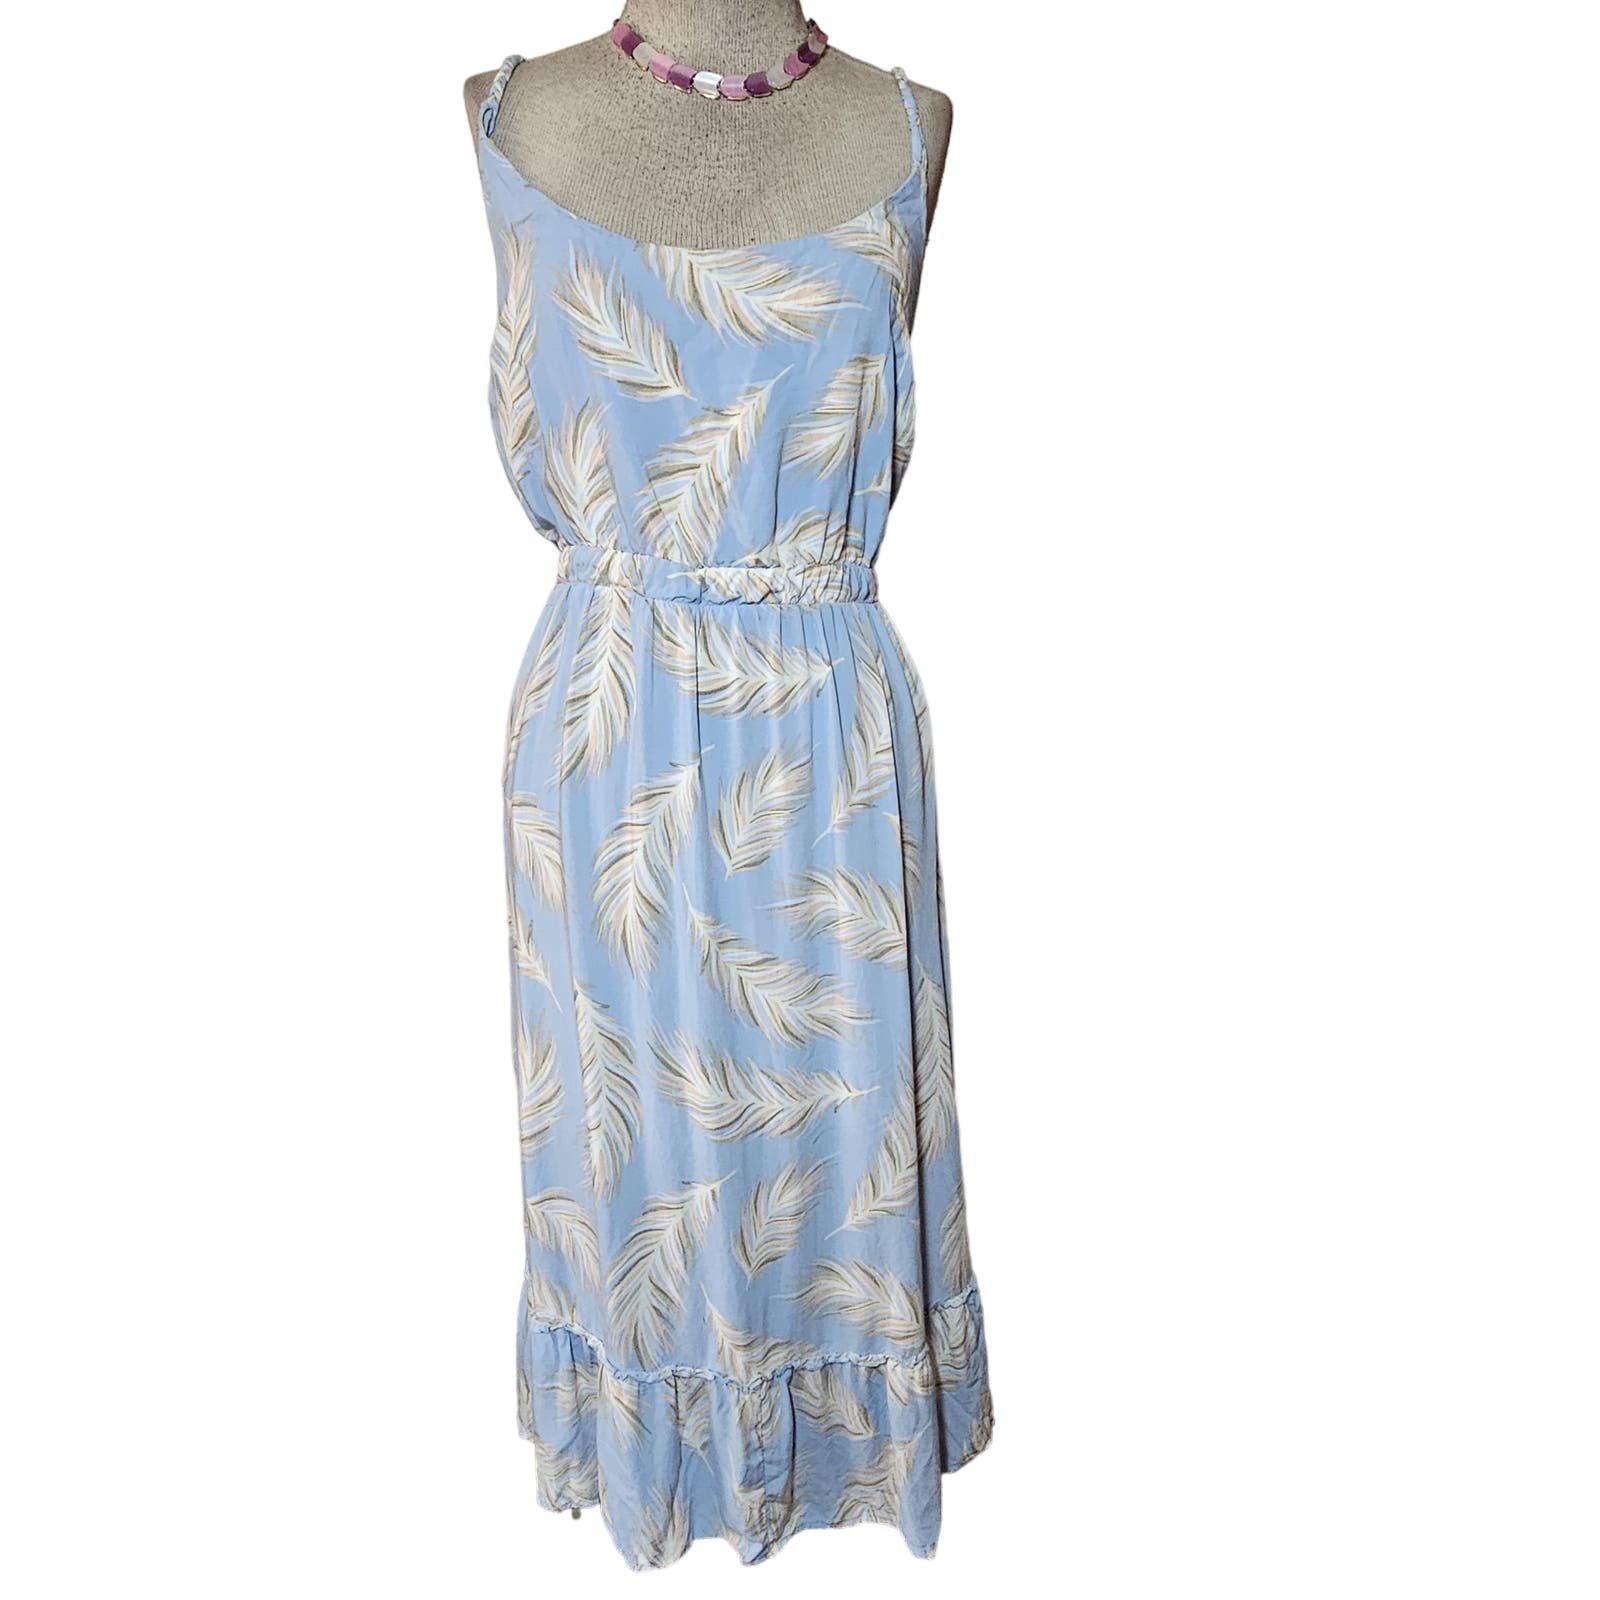 Feather Print Sleeveless Summer Dress Size 2X 8eXecI6jx